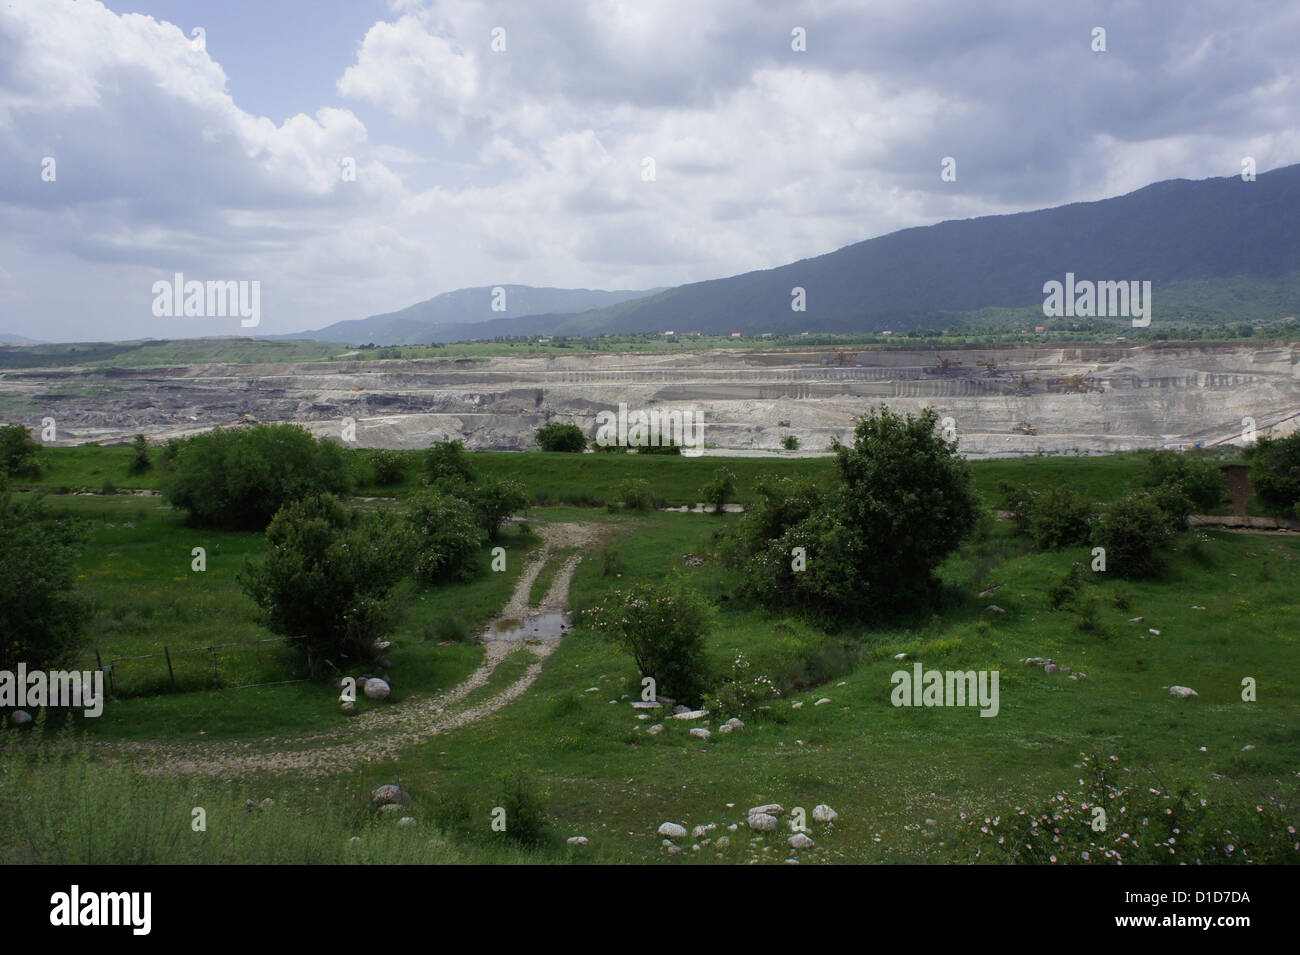 Gacko open pit coalmine in Bosnia and Herzegovina Stock Photo